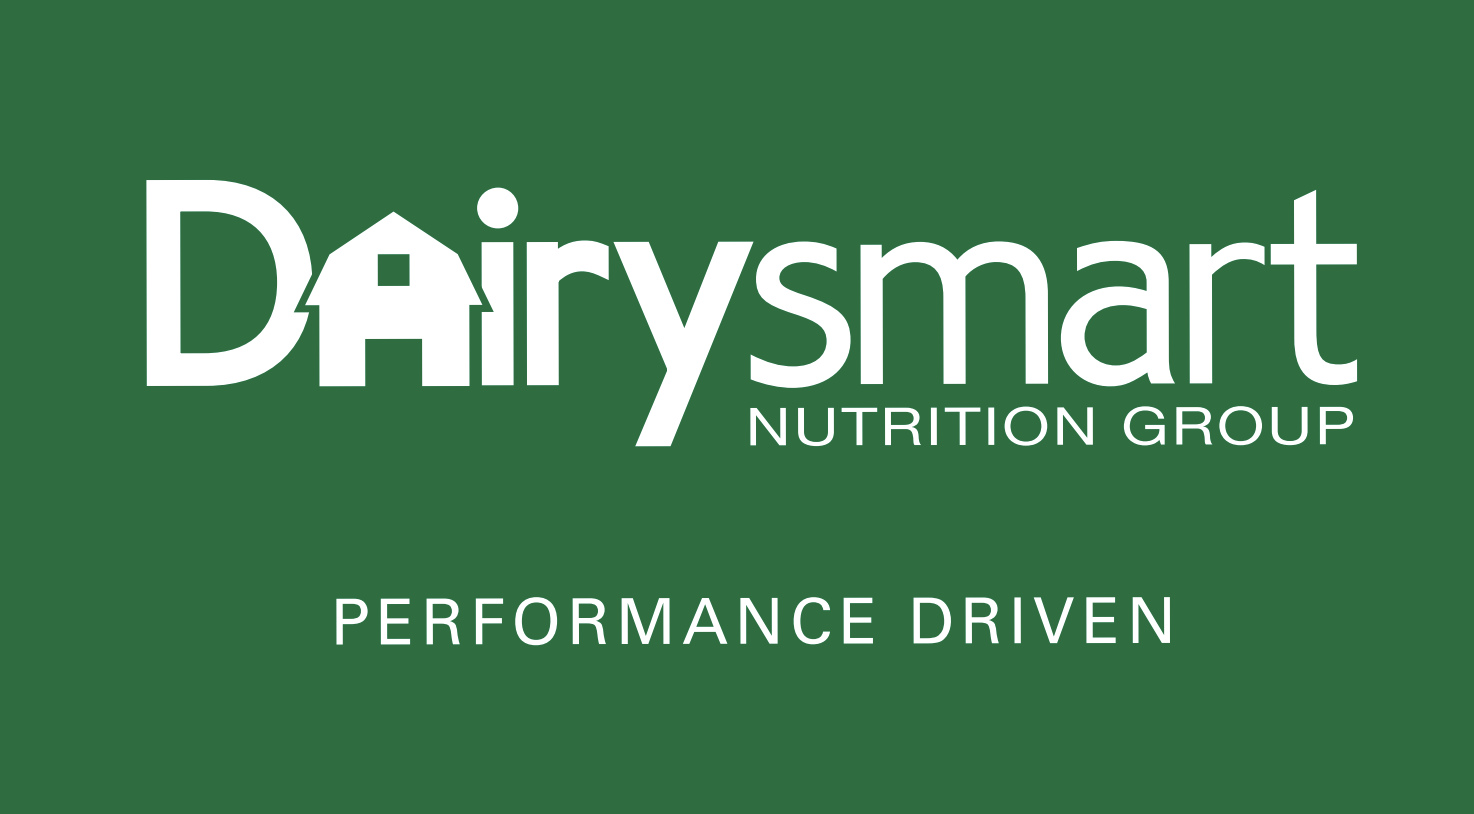 Matt Walpole, Dairysmart Nutrition